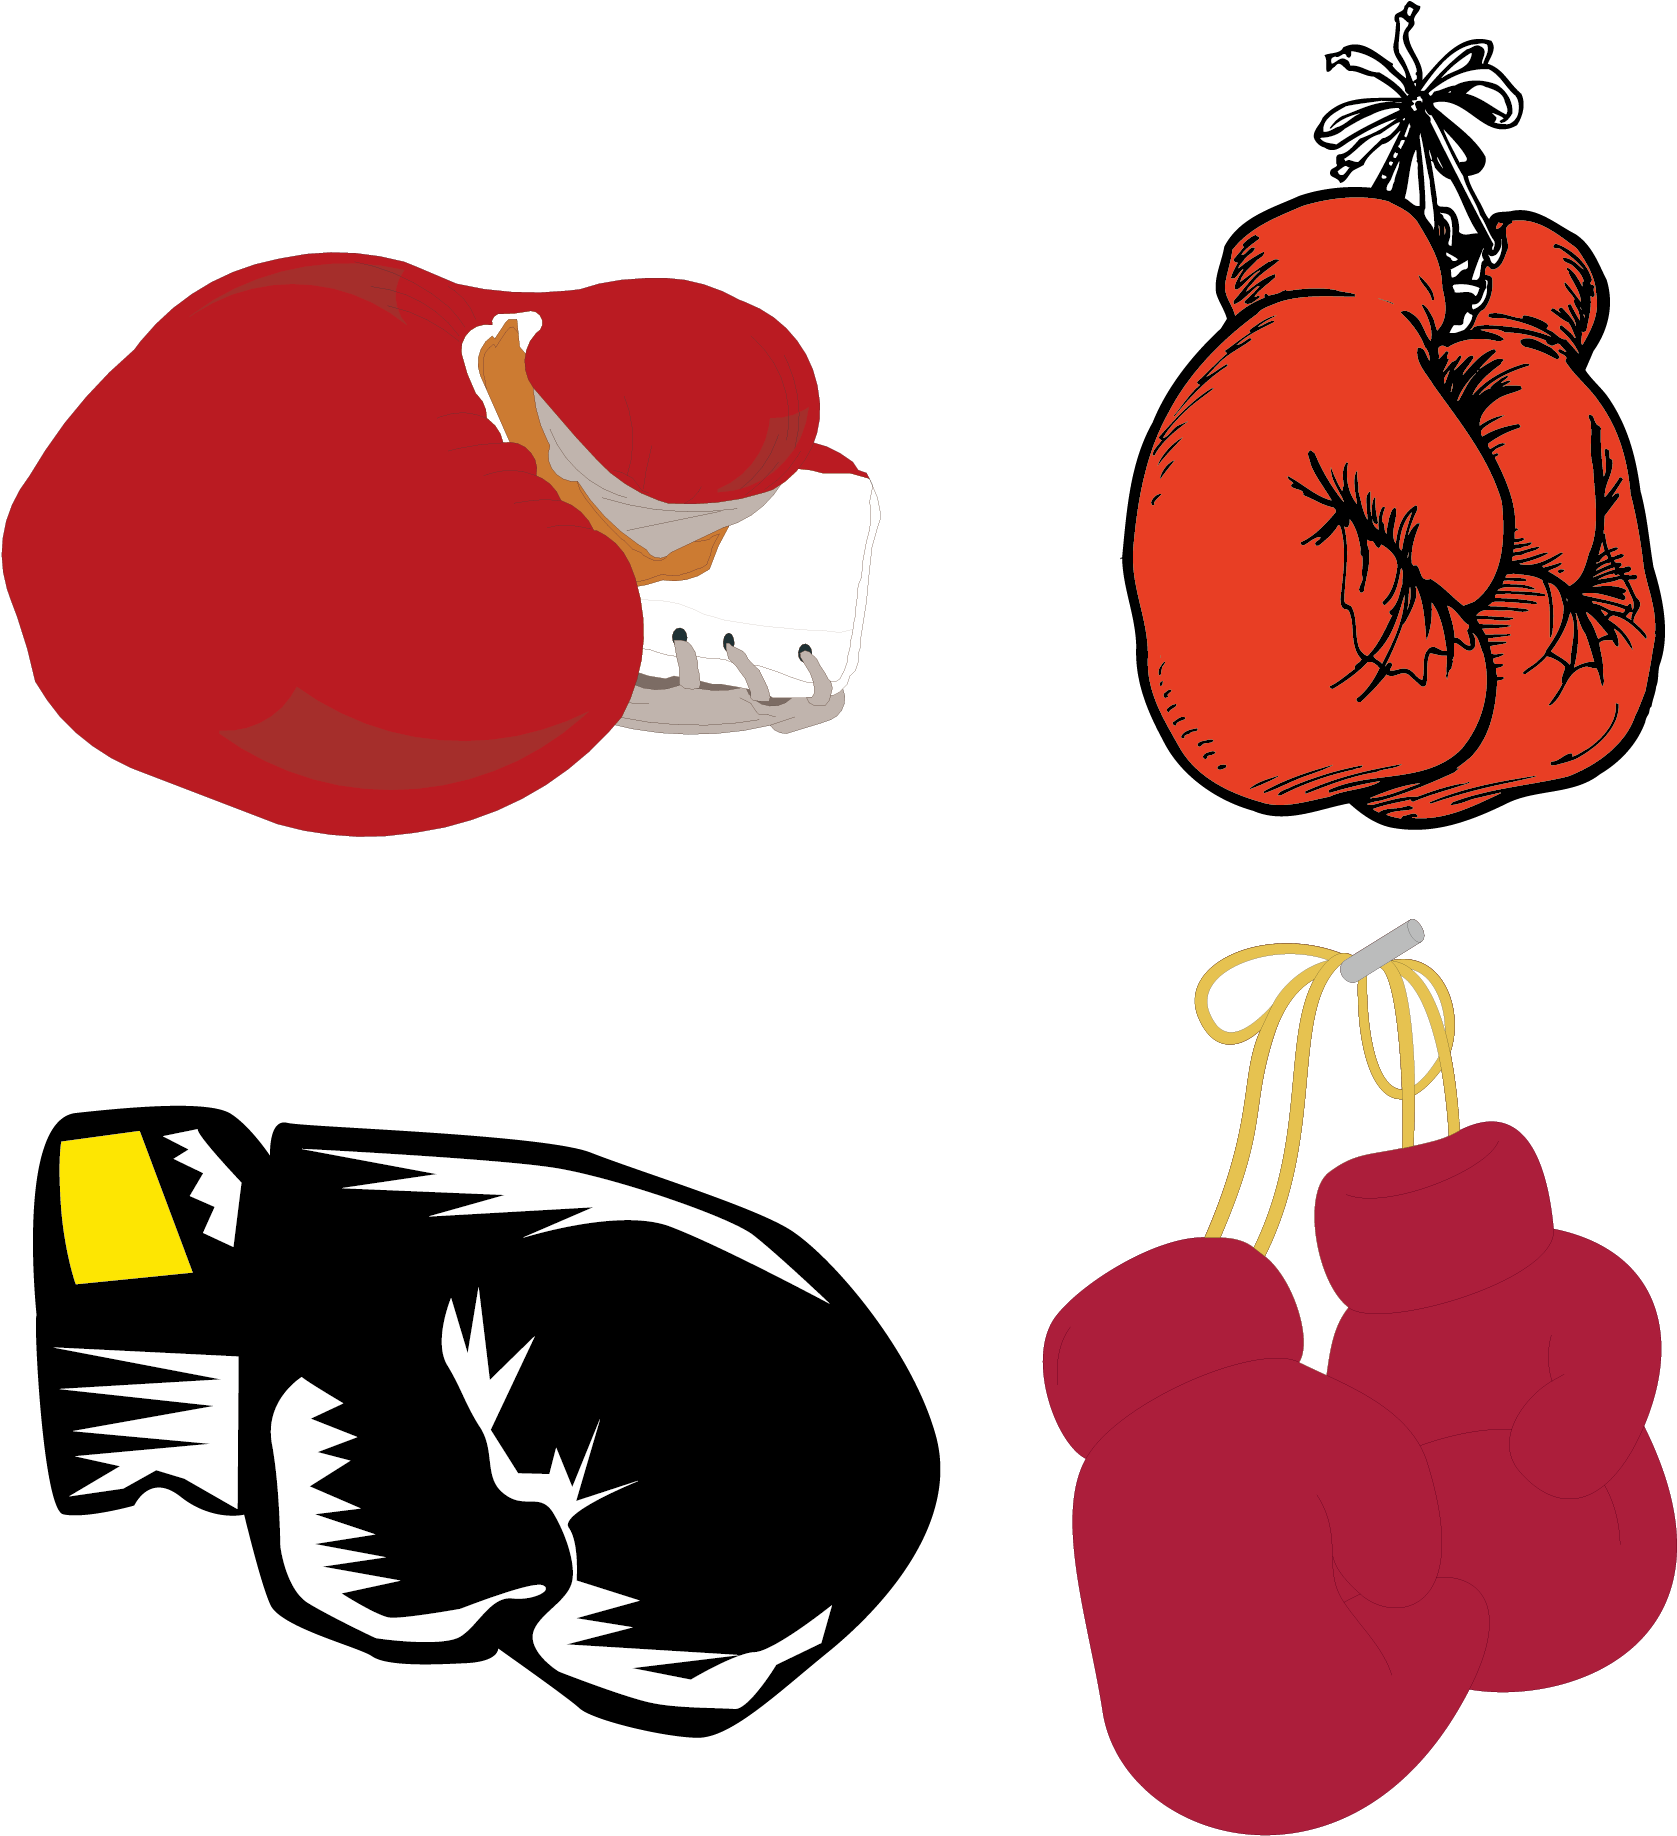 Boxing Glove Clip Art - North American Boxing Federation (2000x2000)